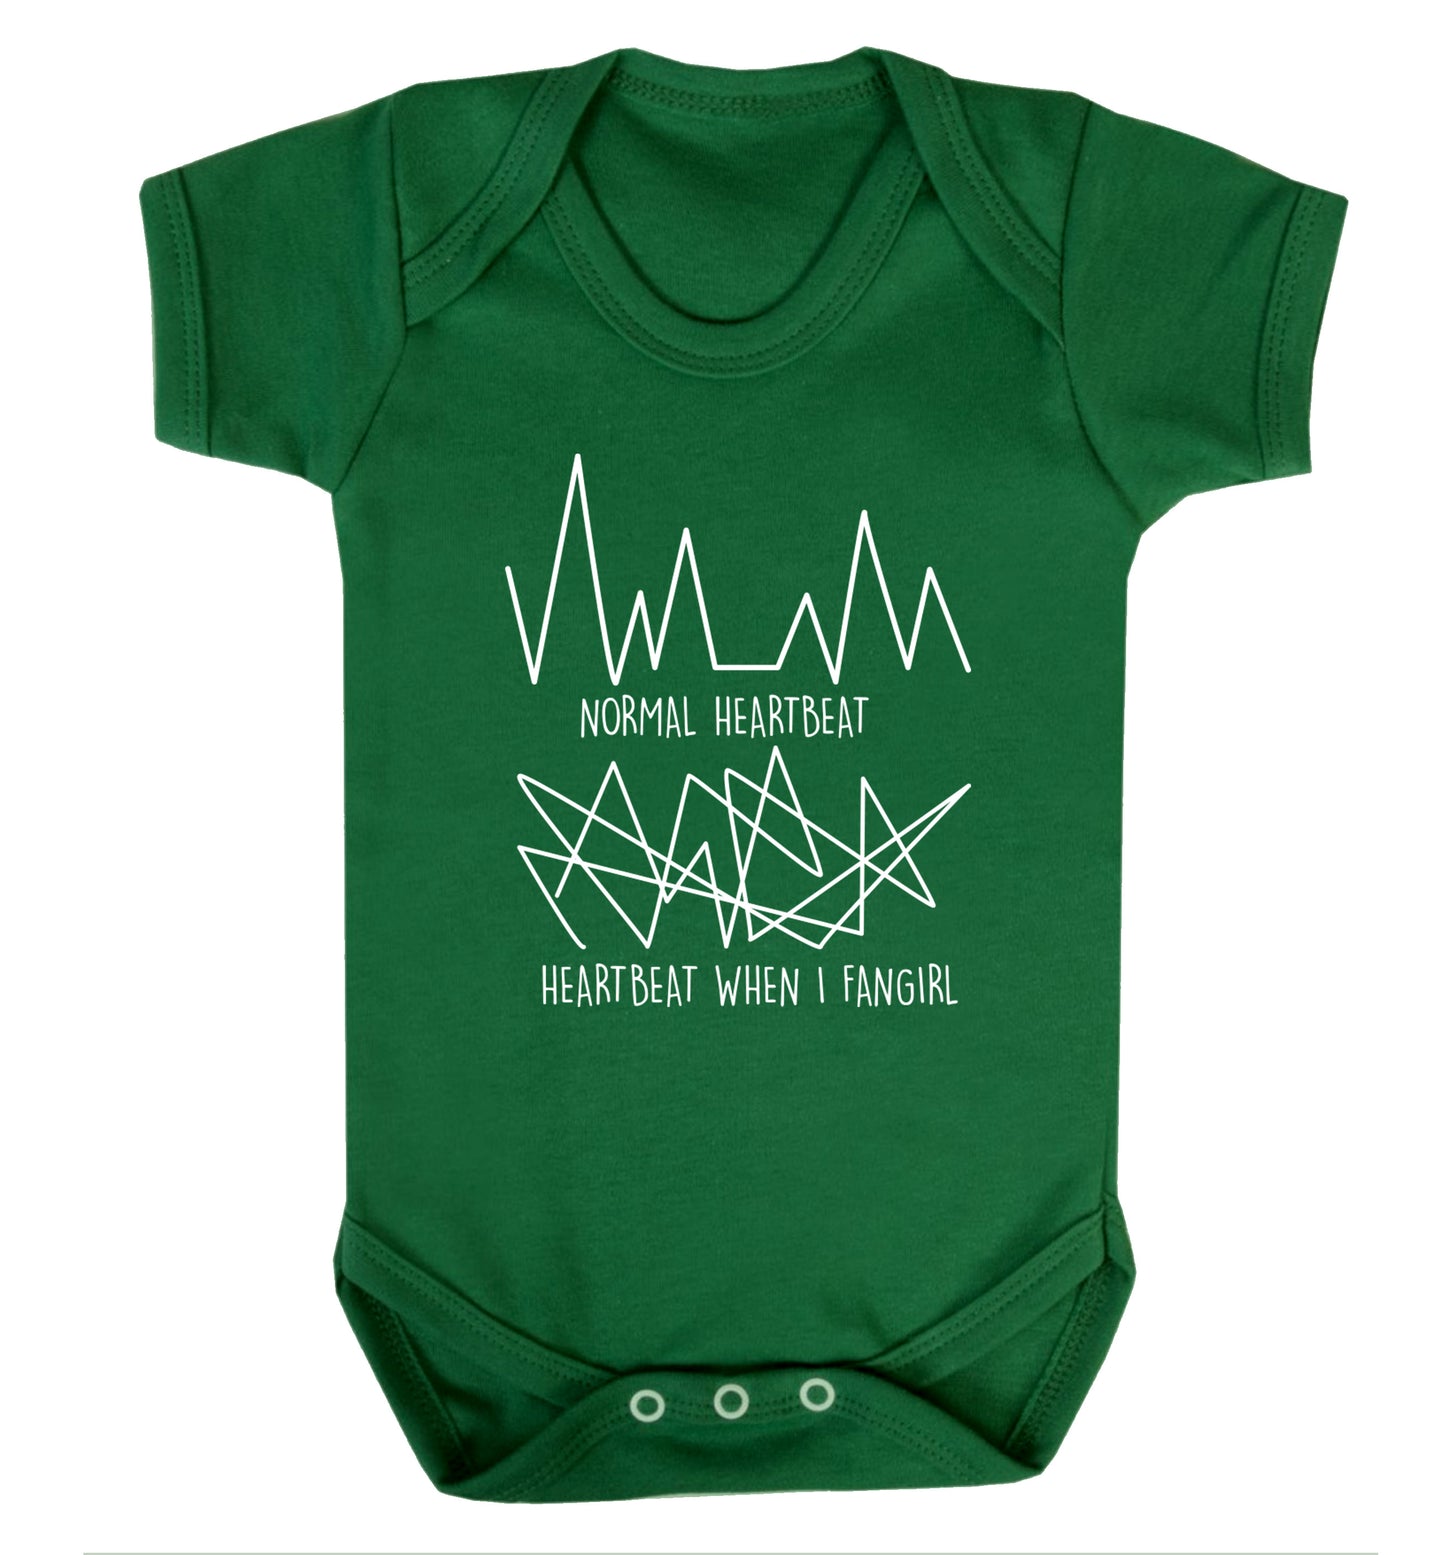 Normal heartbeat heartbeat when I fangirl Baby Vest green 18-24 months